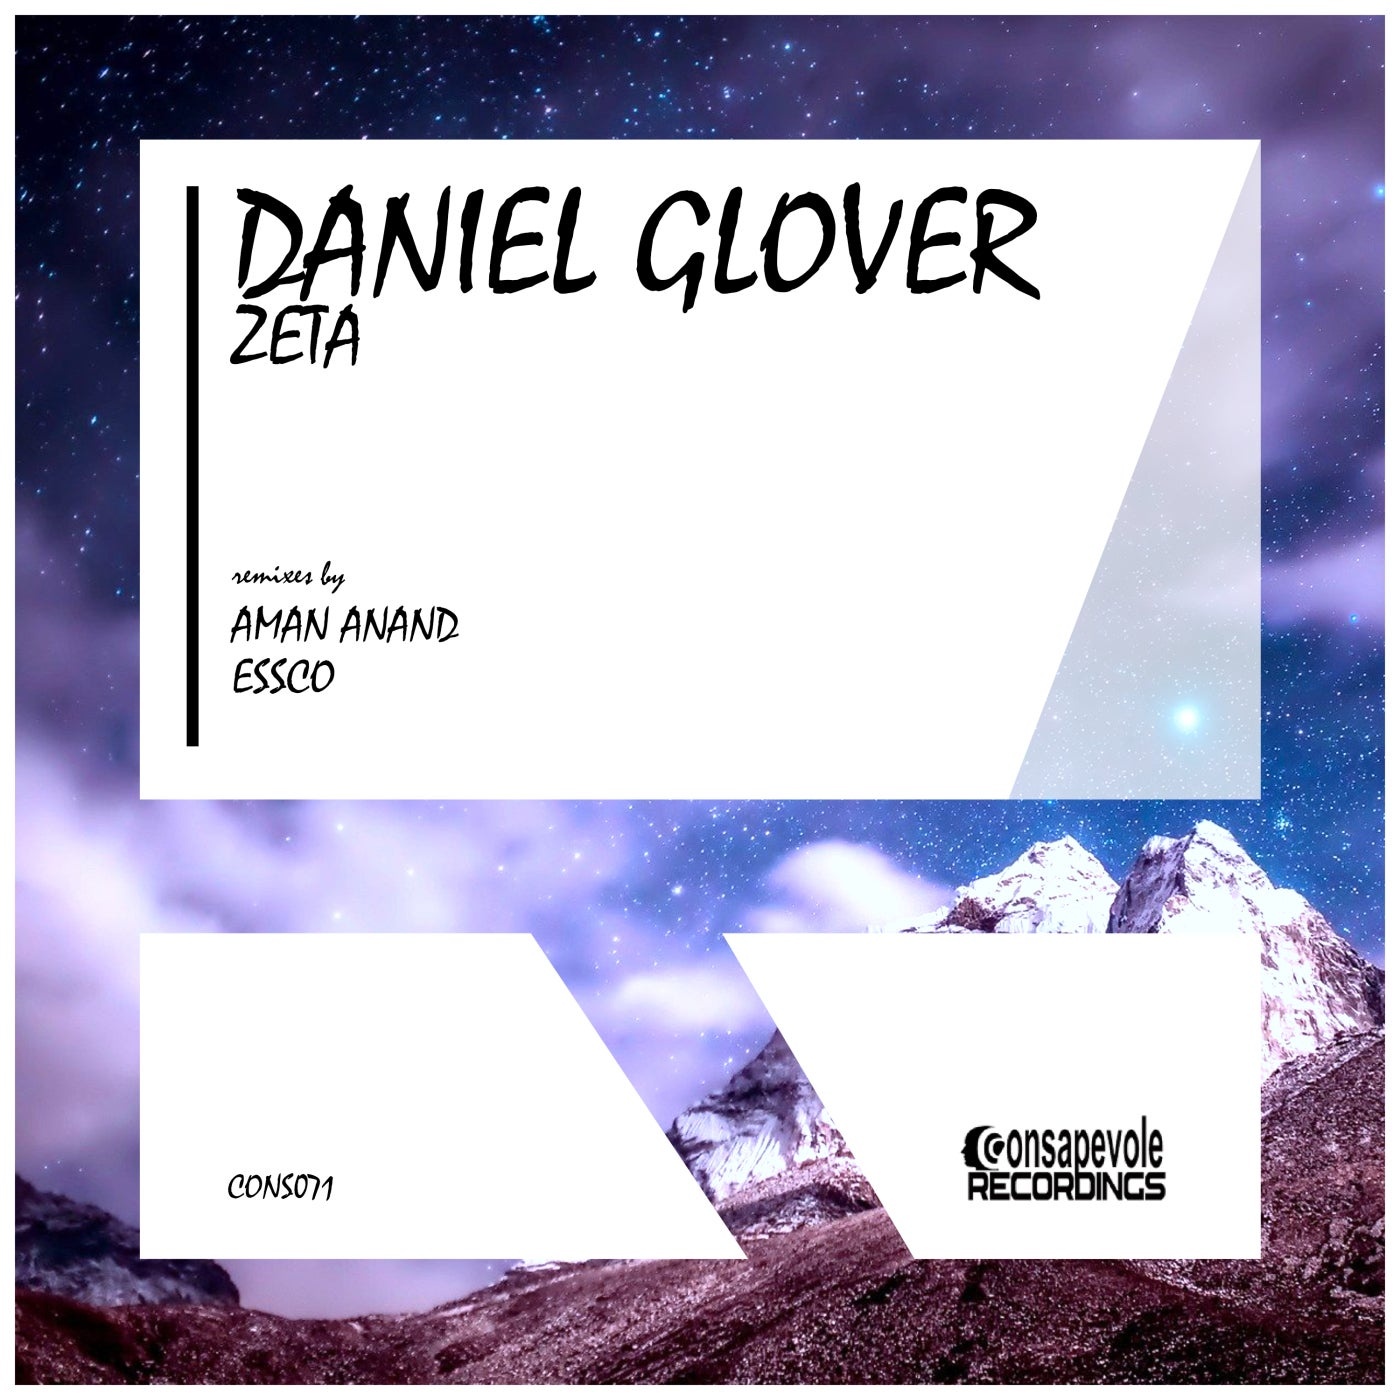 Daniel Glover - Zeta [CONS071]